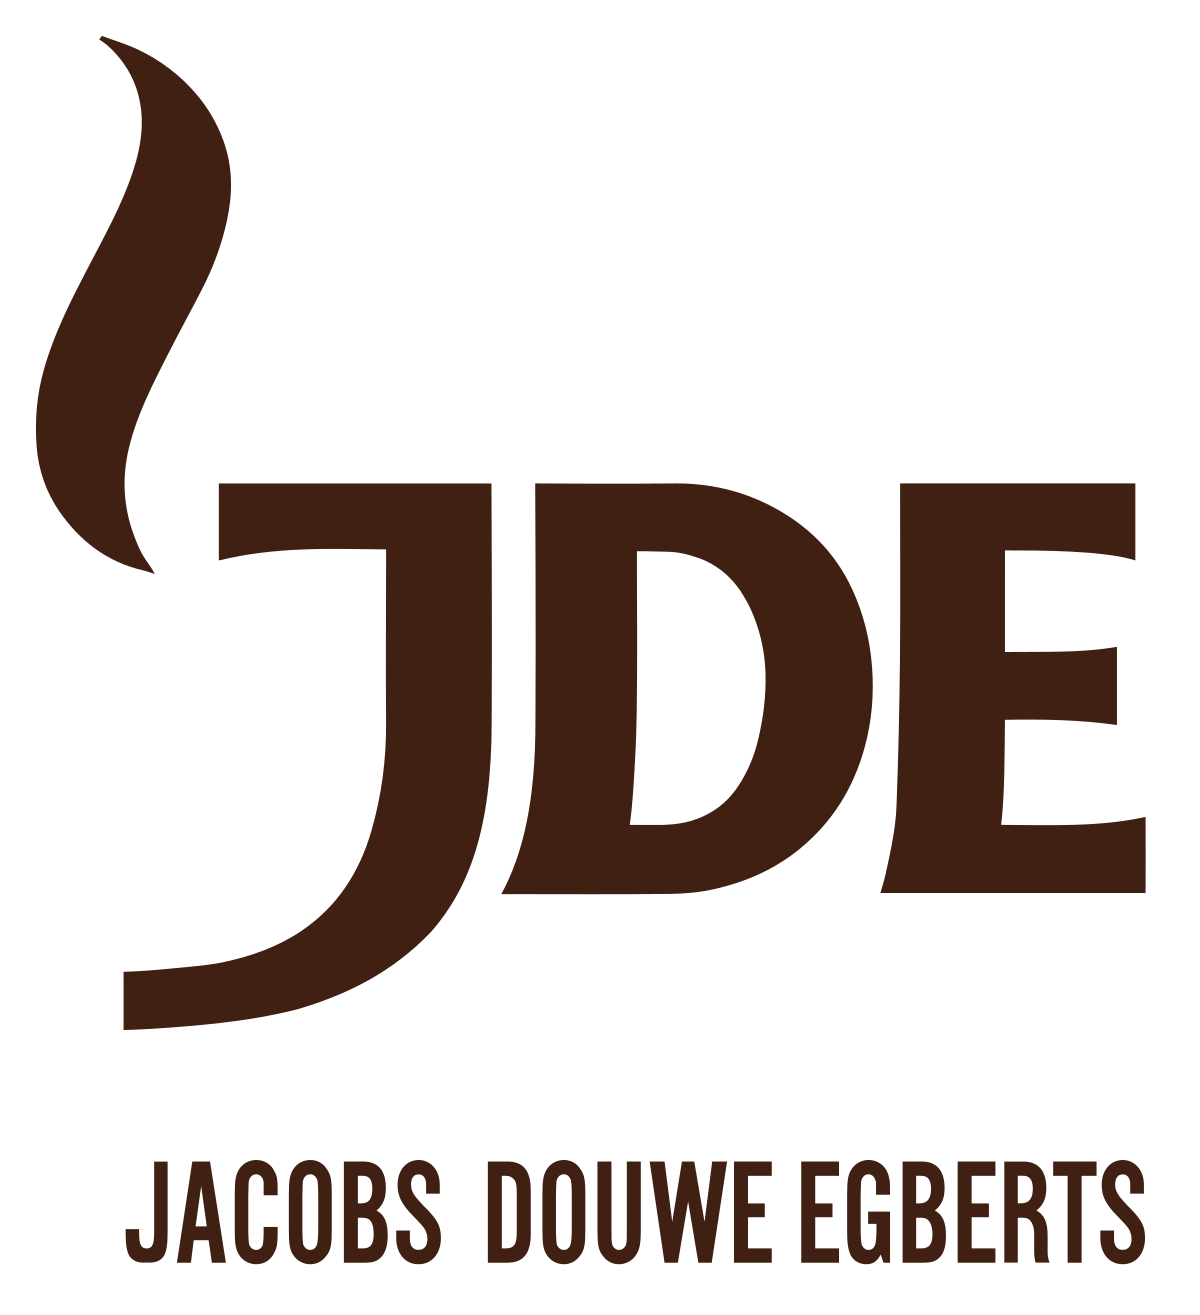 Jacobs Douwe Egberts